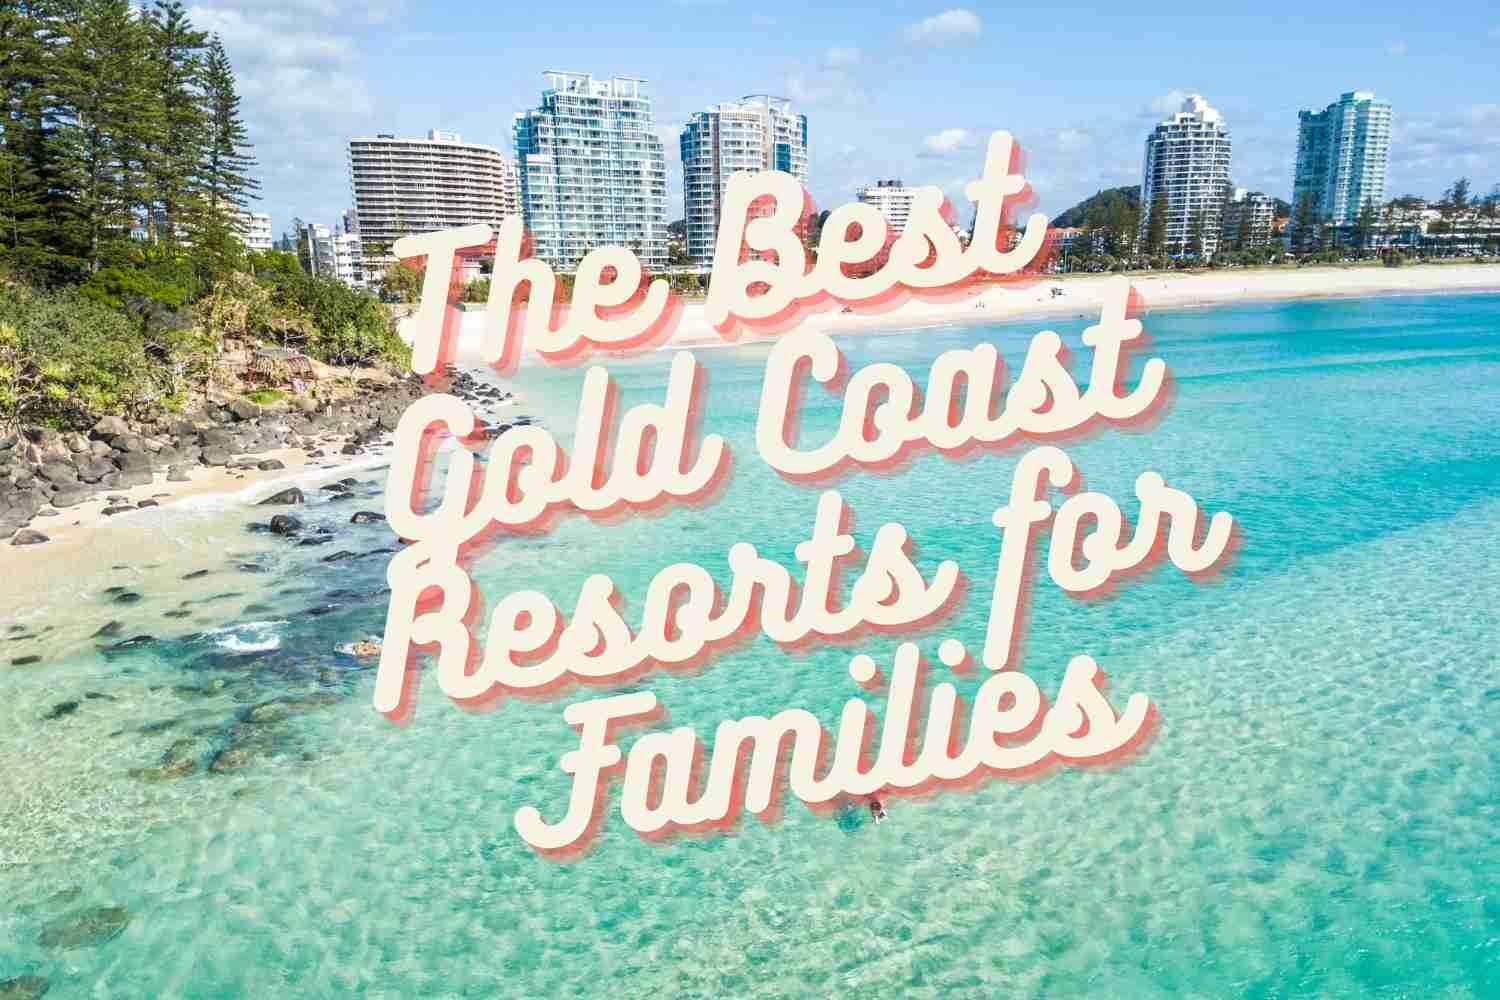 Family accommodation Gold Coast